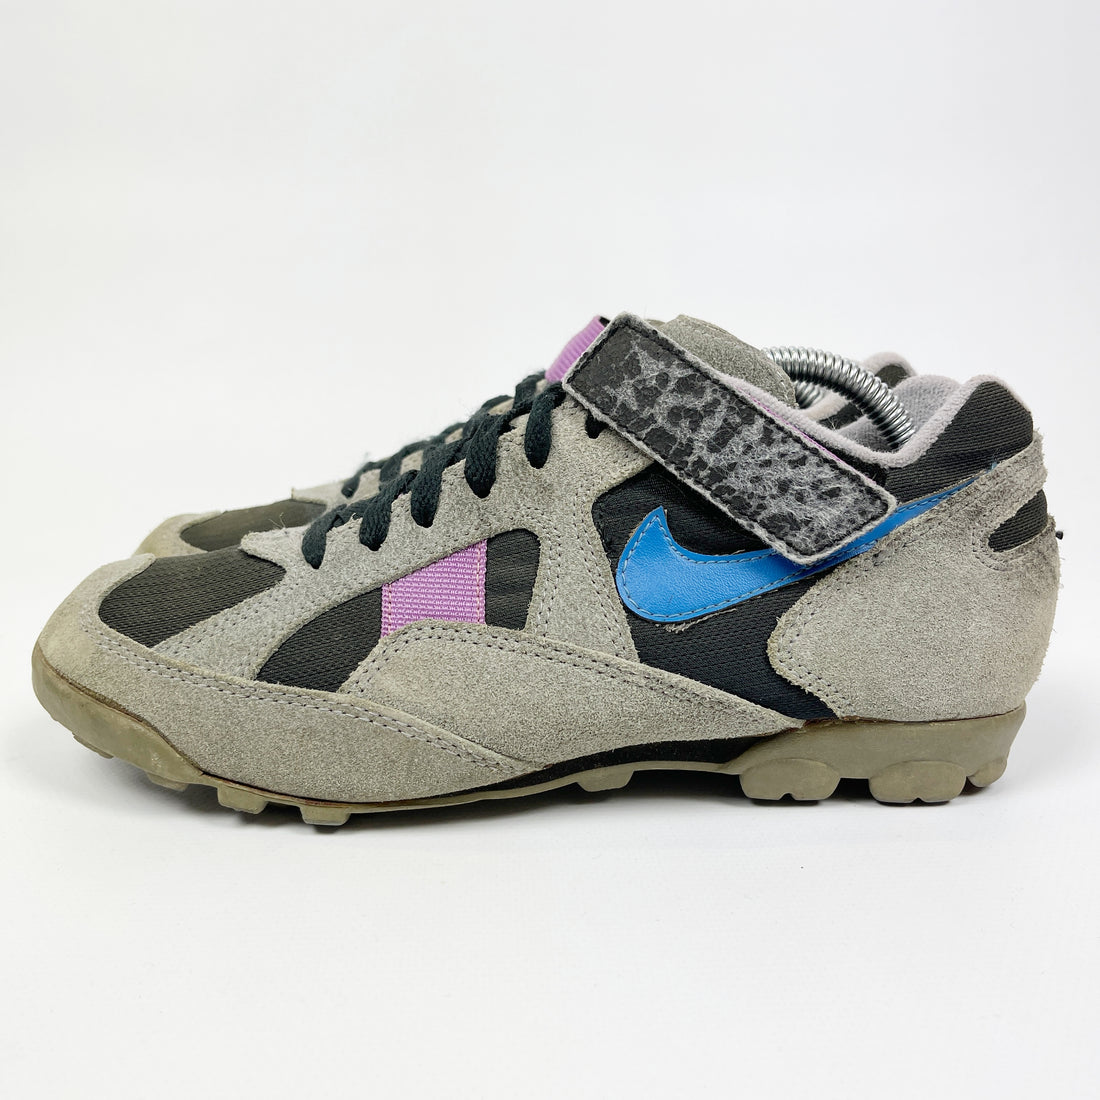 Nike Nguba Outdoor Trail 1993 - Vintagetts